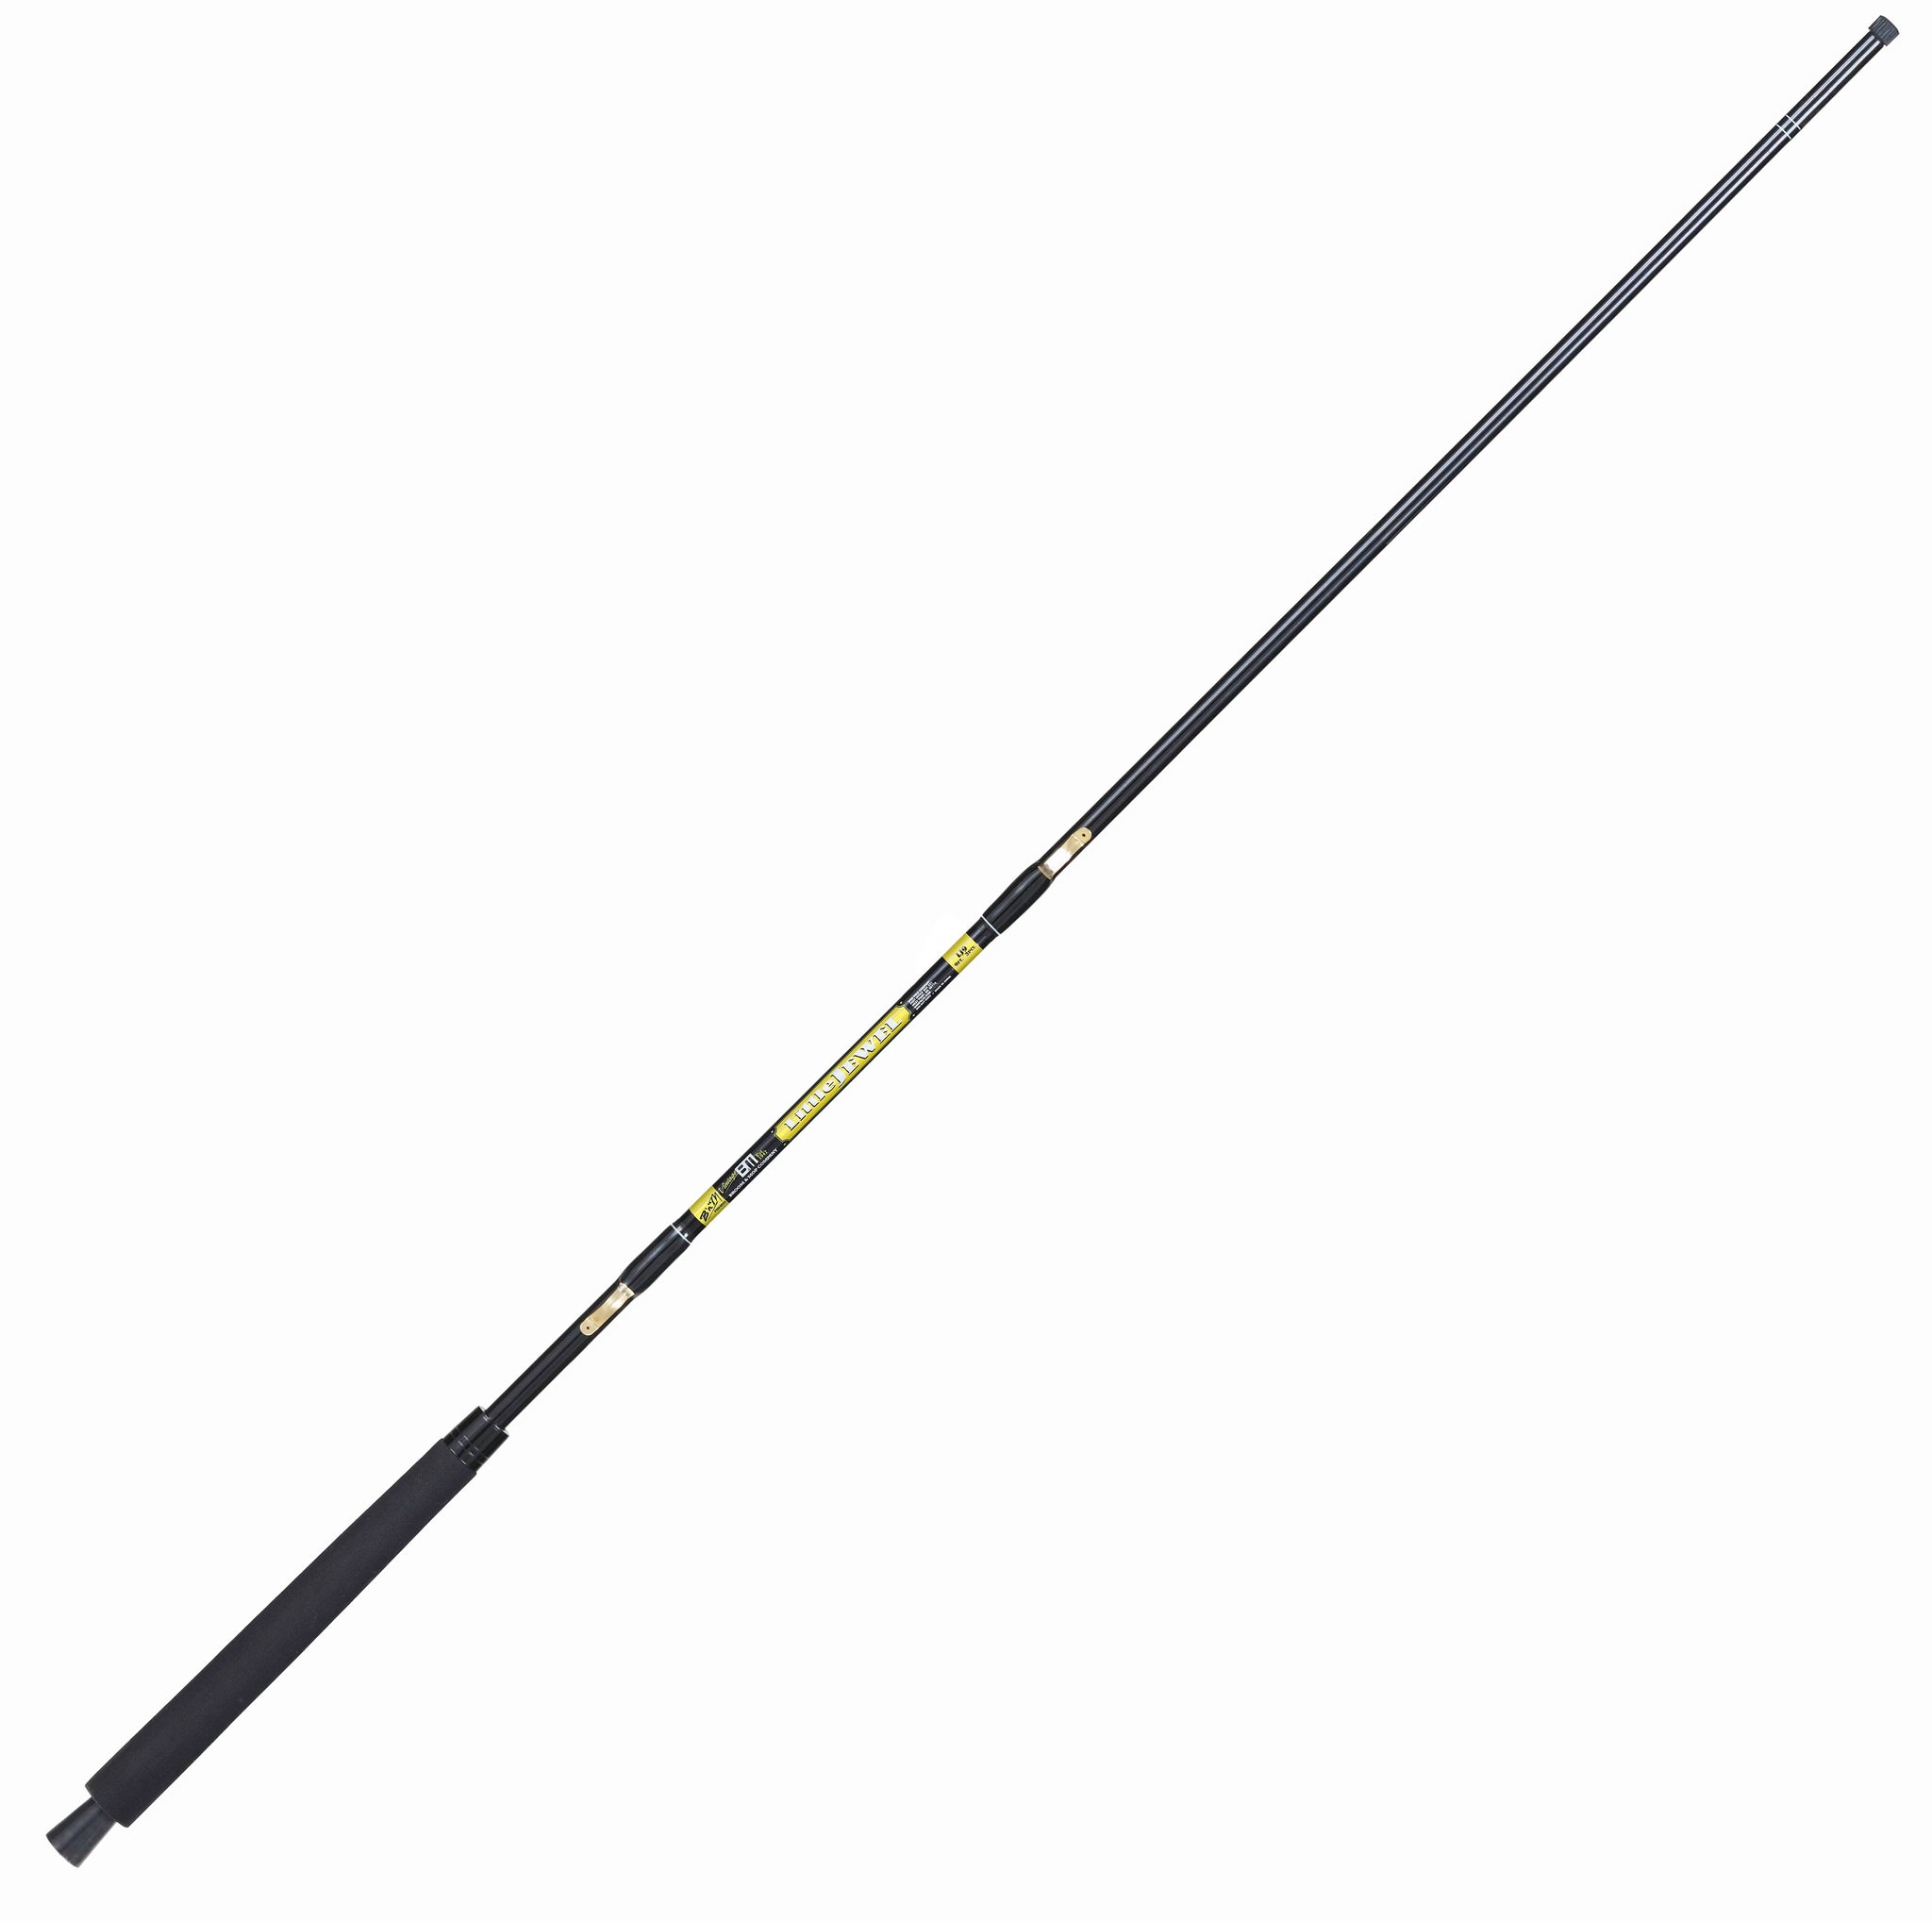 Buy plplaaoo Fishing Pole,Fishing Rod,Mini Fishing Rod,Small